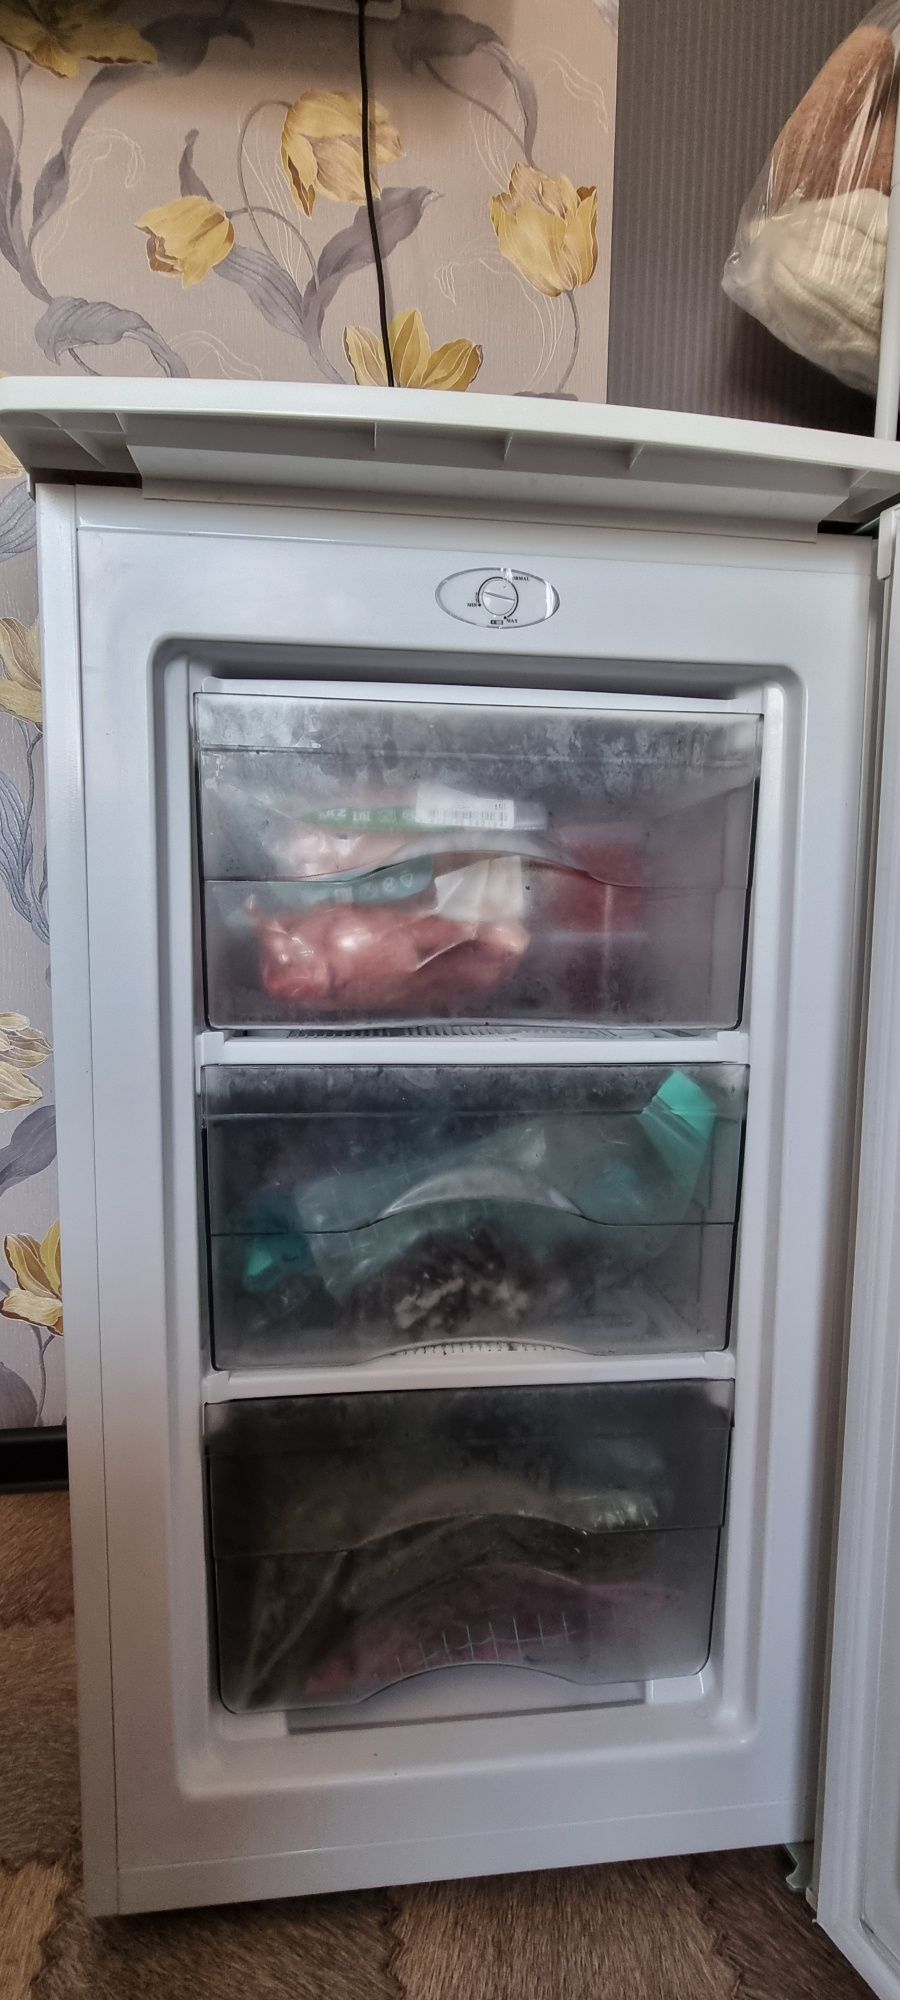 Продам морозильный шкаф